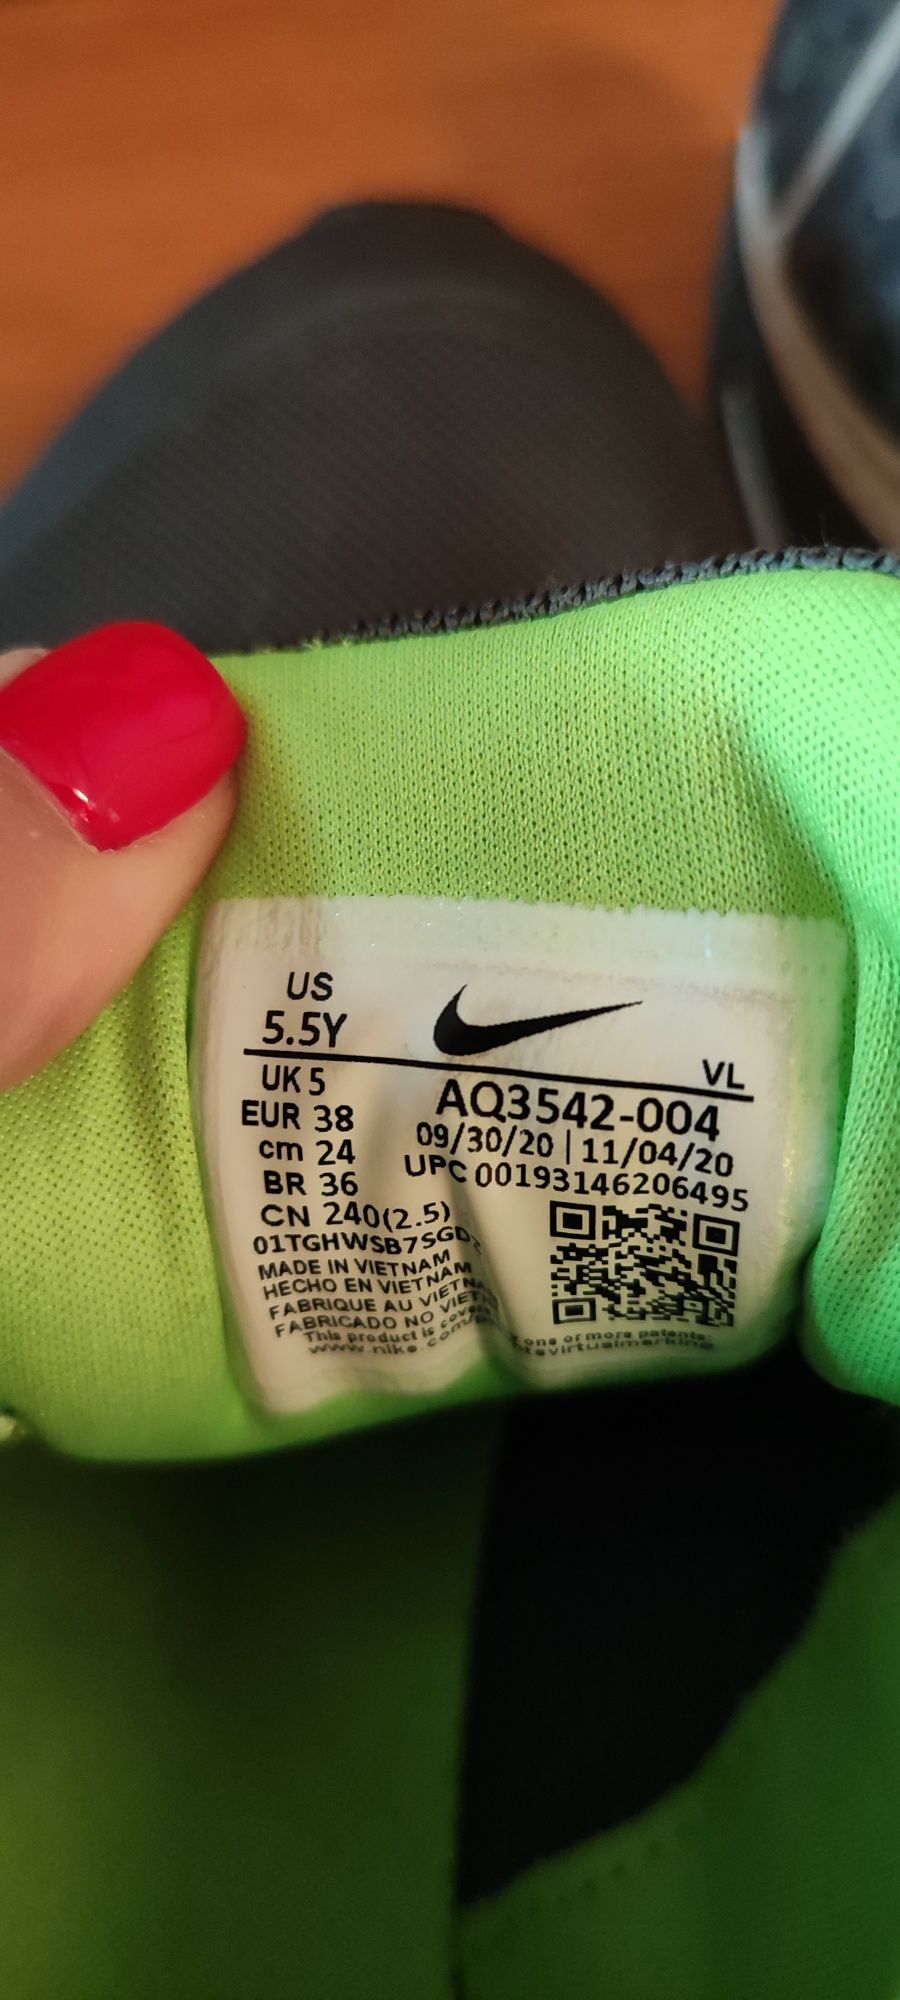 Buty Nike Star Runner rozmiar 38